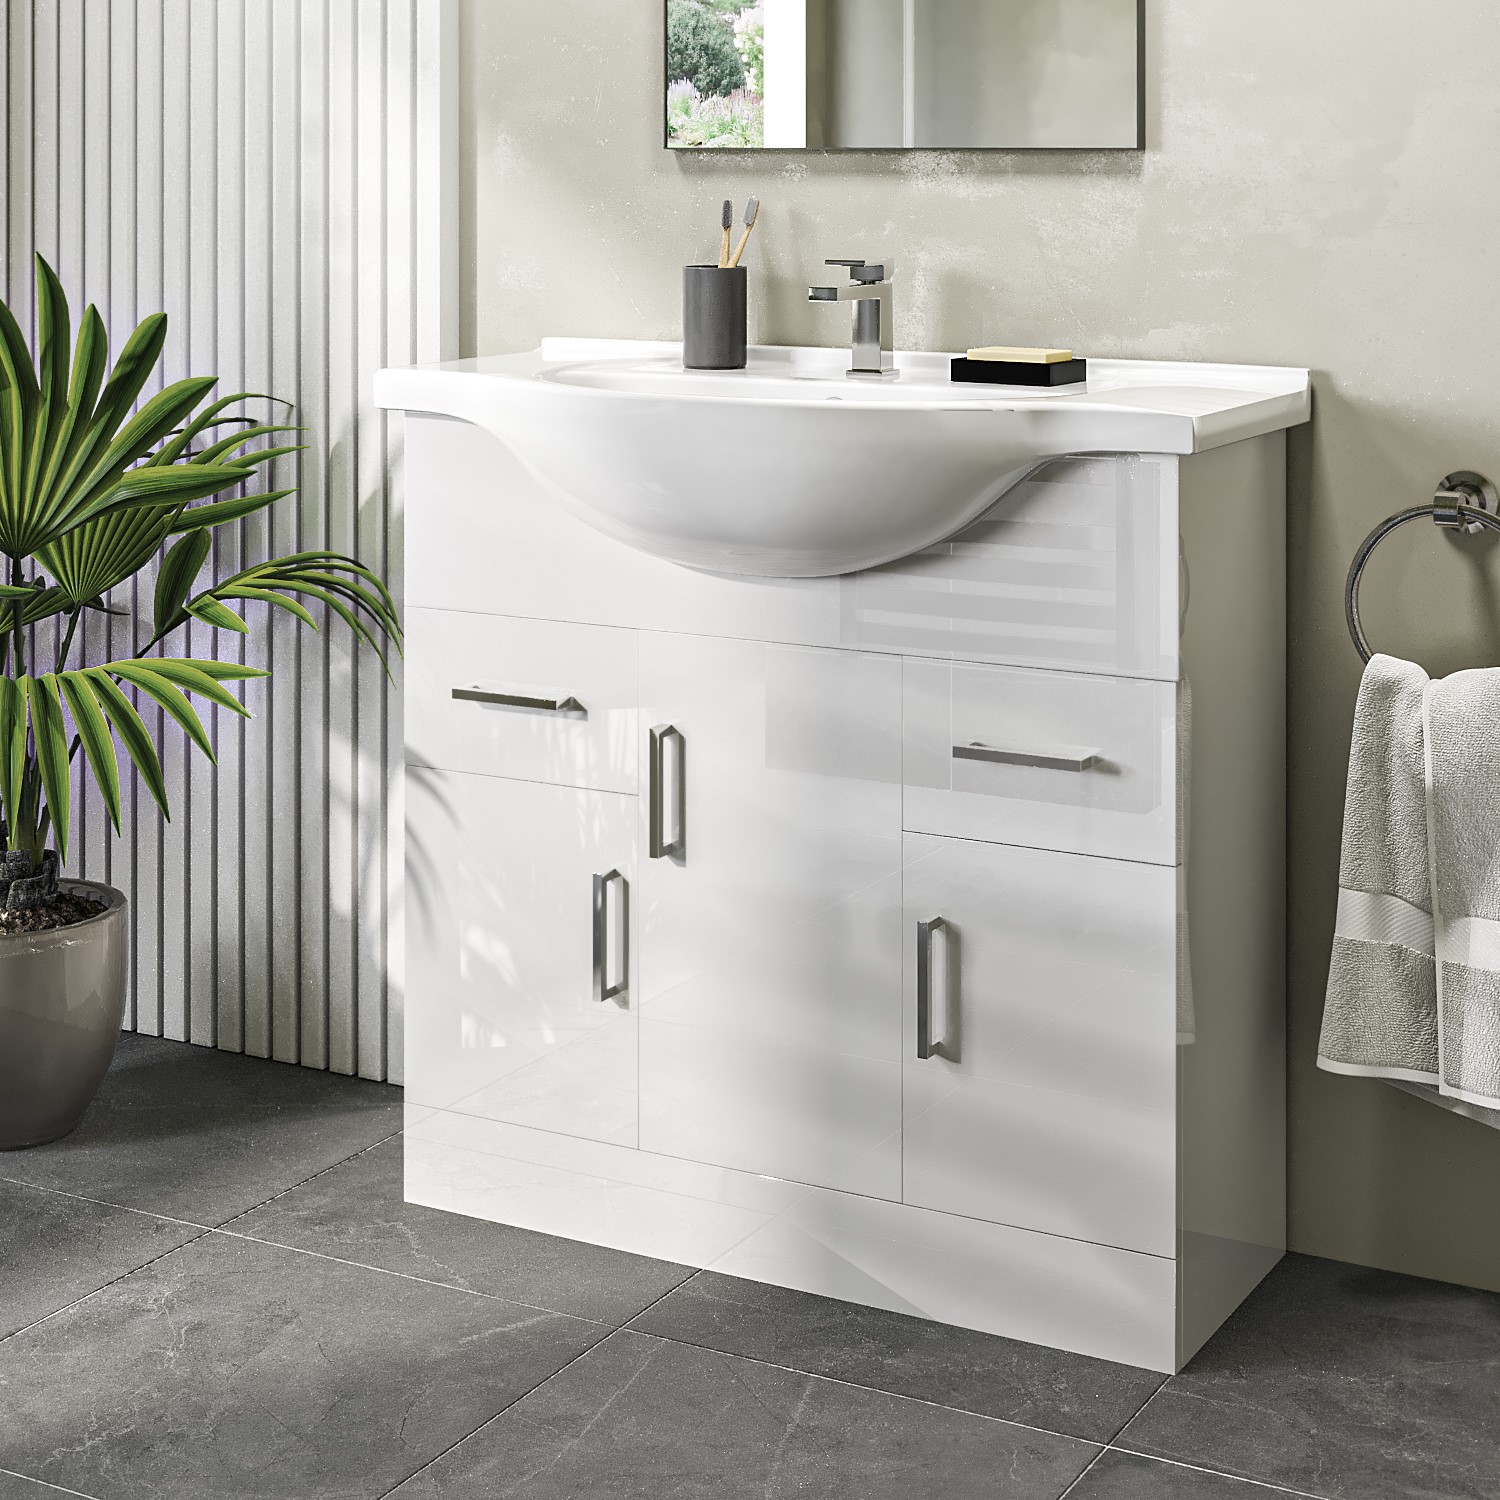 NRG Gloss White Bathroom Cabinet Vanity Sink Unit Storage Furniture with Basin 850mm 